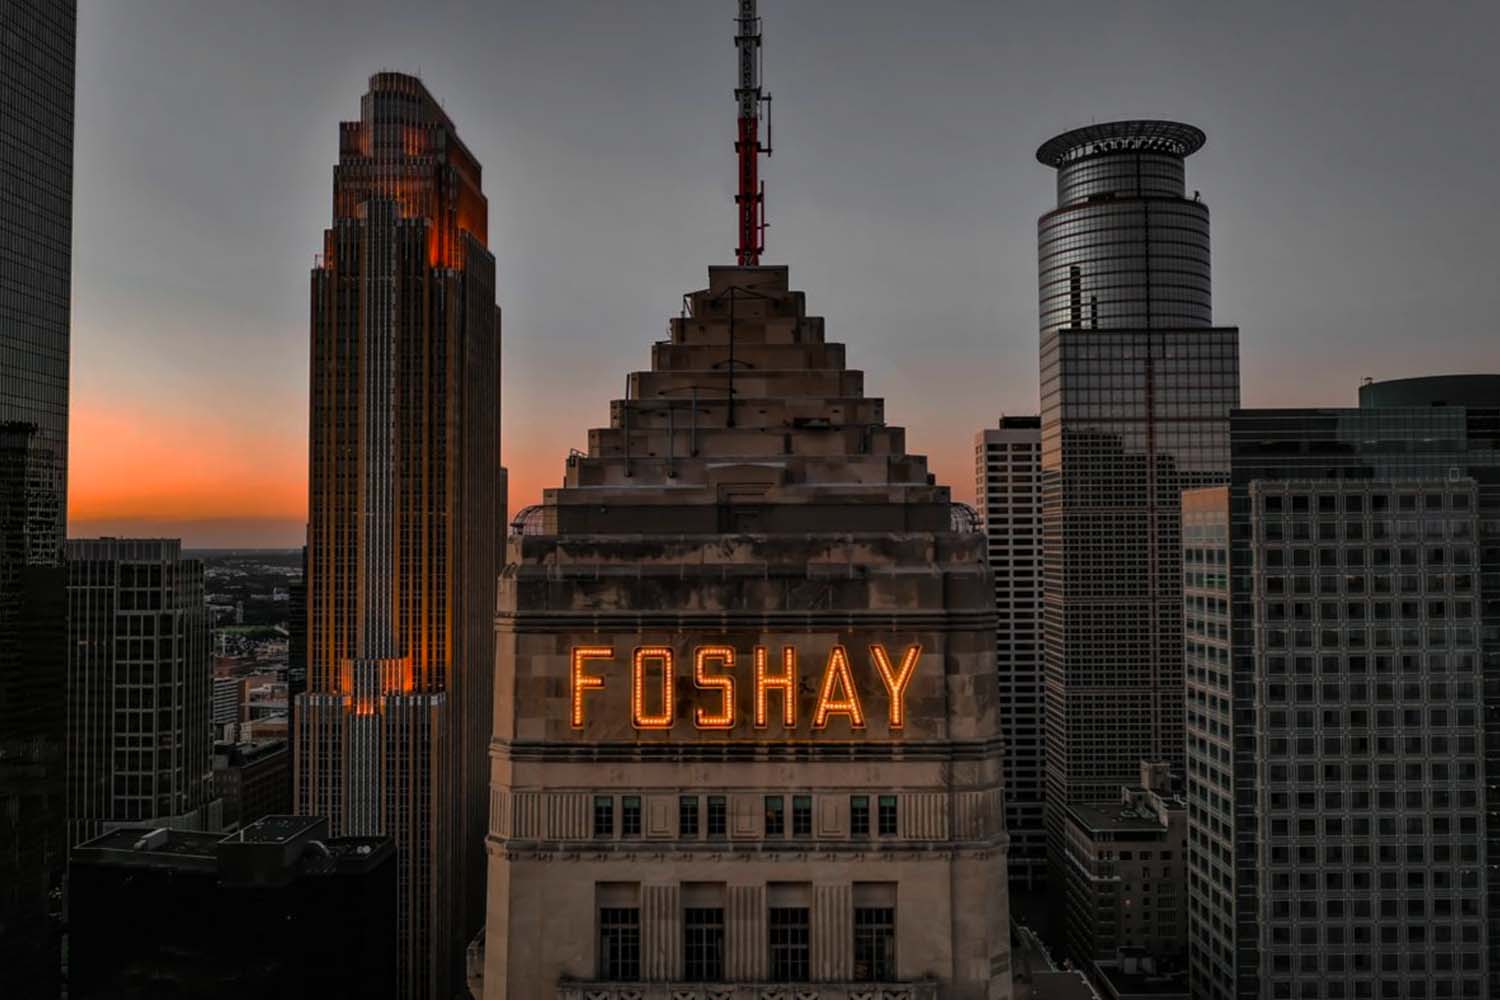 The Foshay